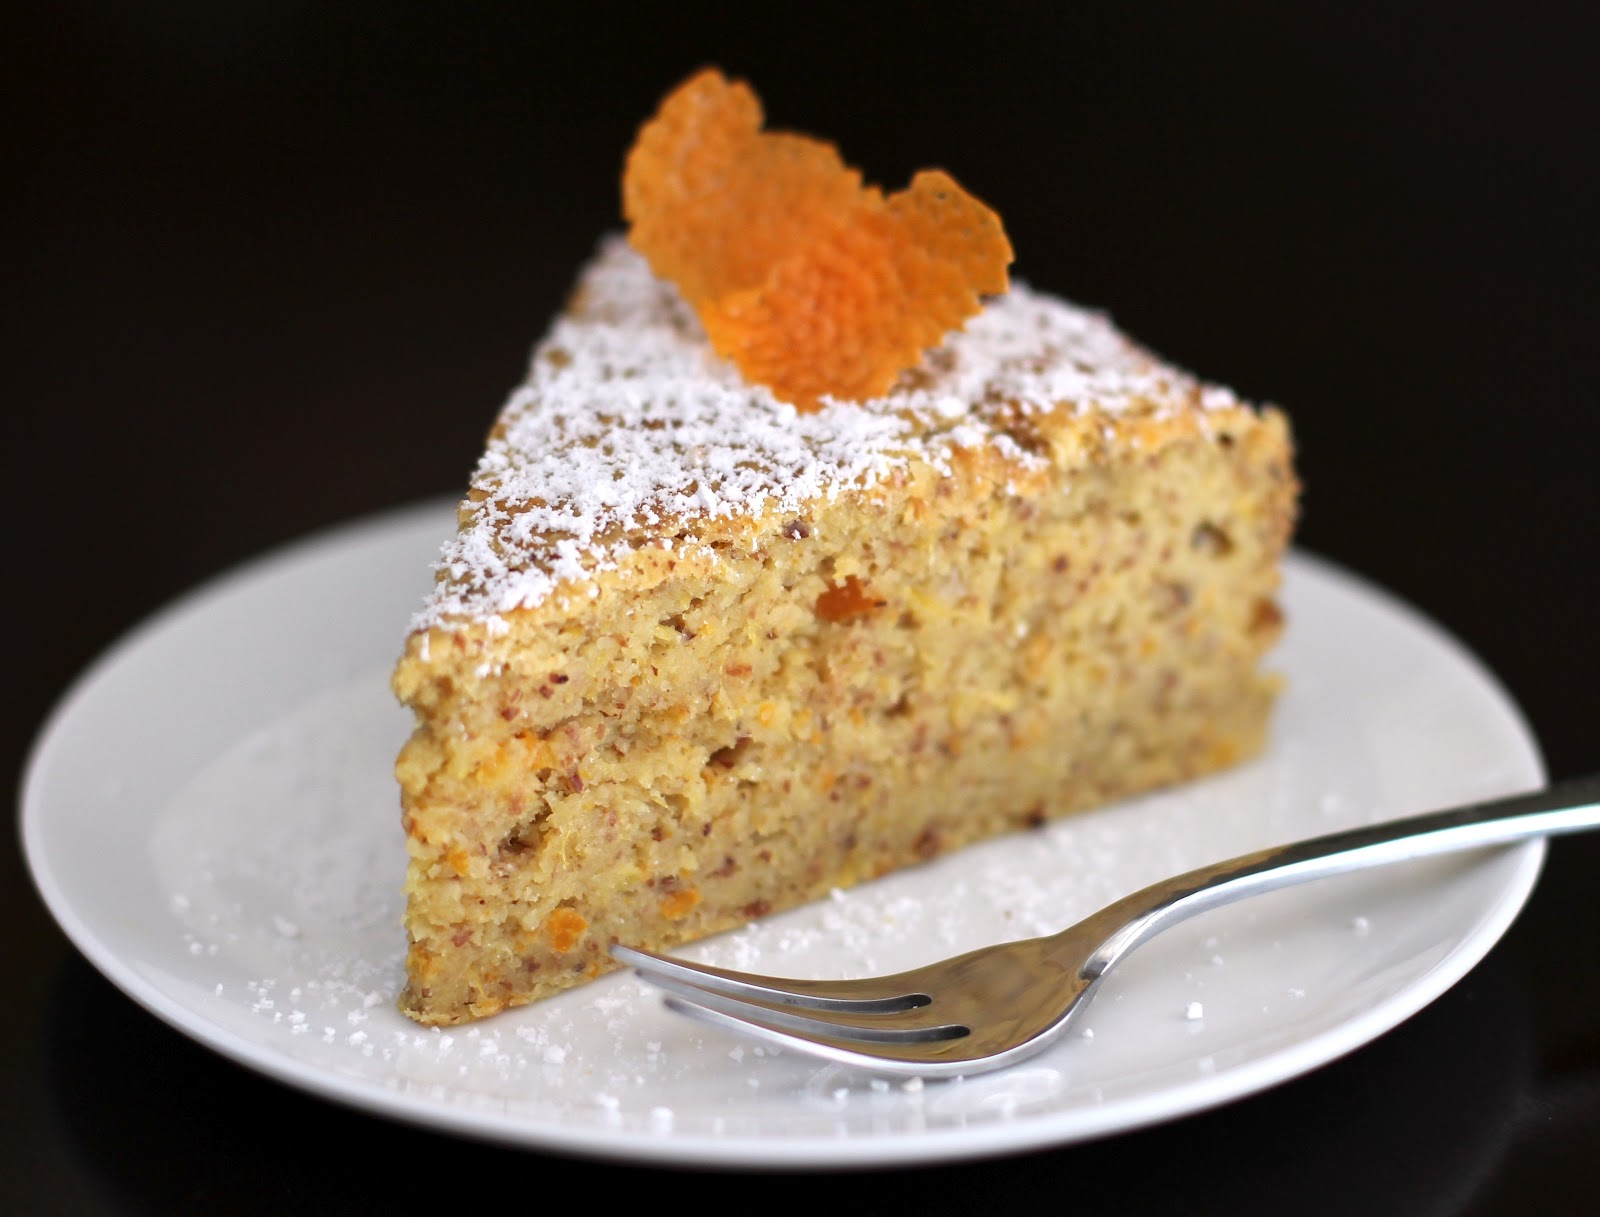 Healthy Whole Orange Almond Cake recipe (refined sugar free, high protein, high fiber, gluten free) - Healthy Dessert Recipes at Desserts with Benefits